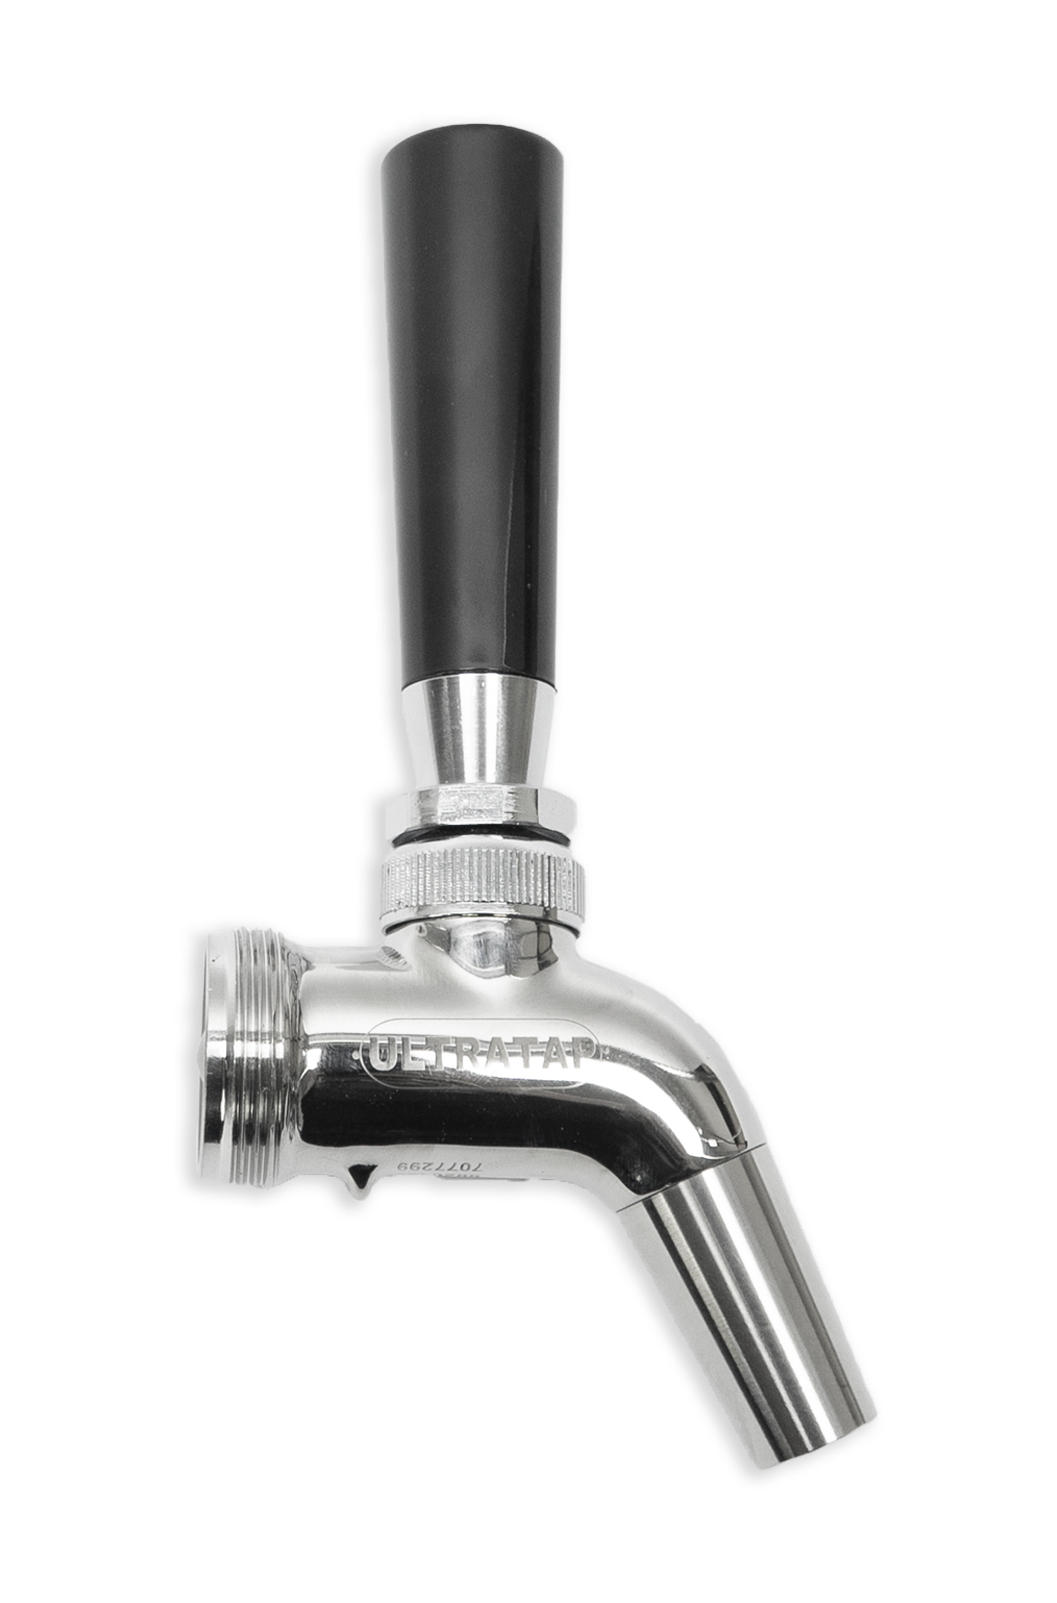 Photo of UltraTap forward-sealin, laminar-flow beer tap